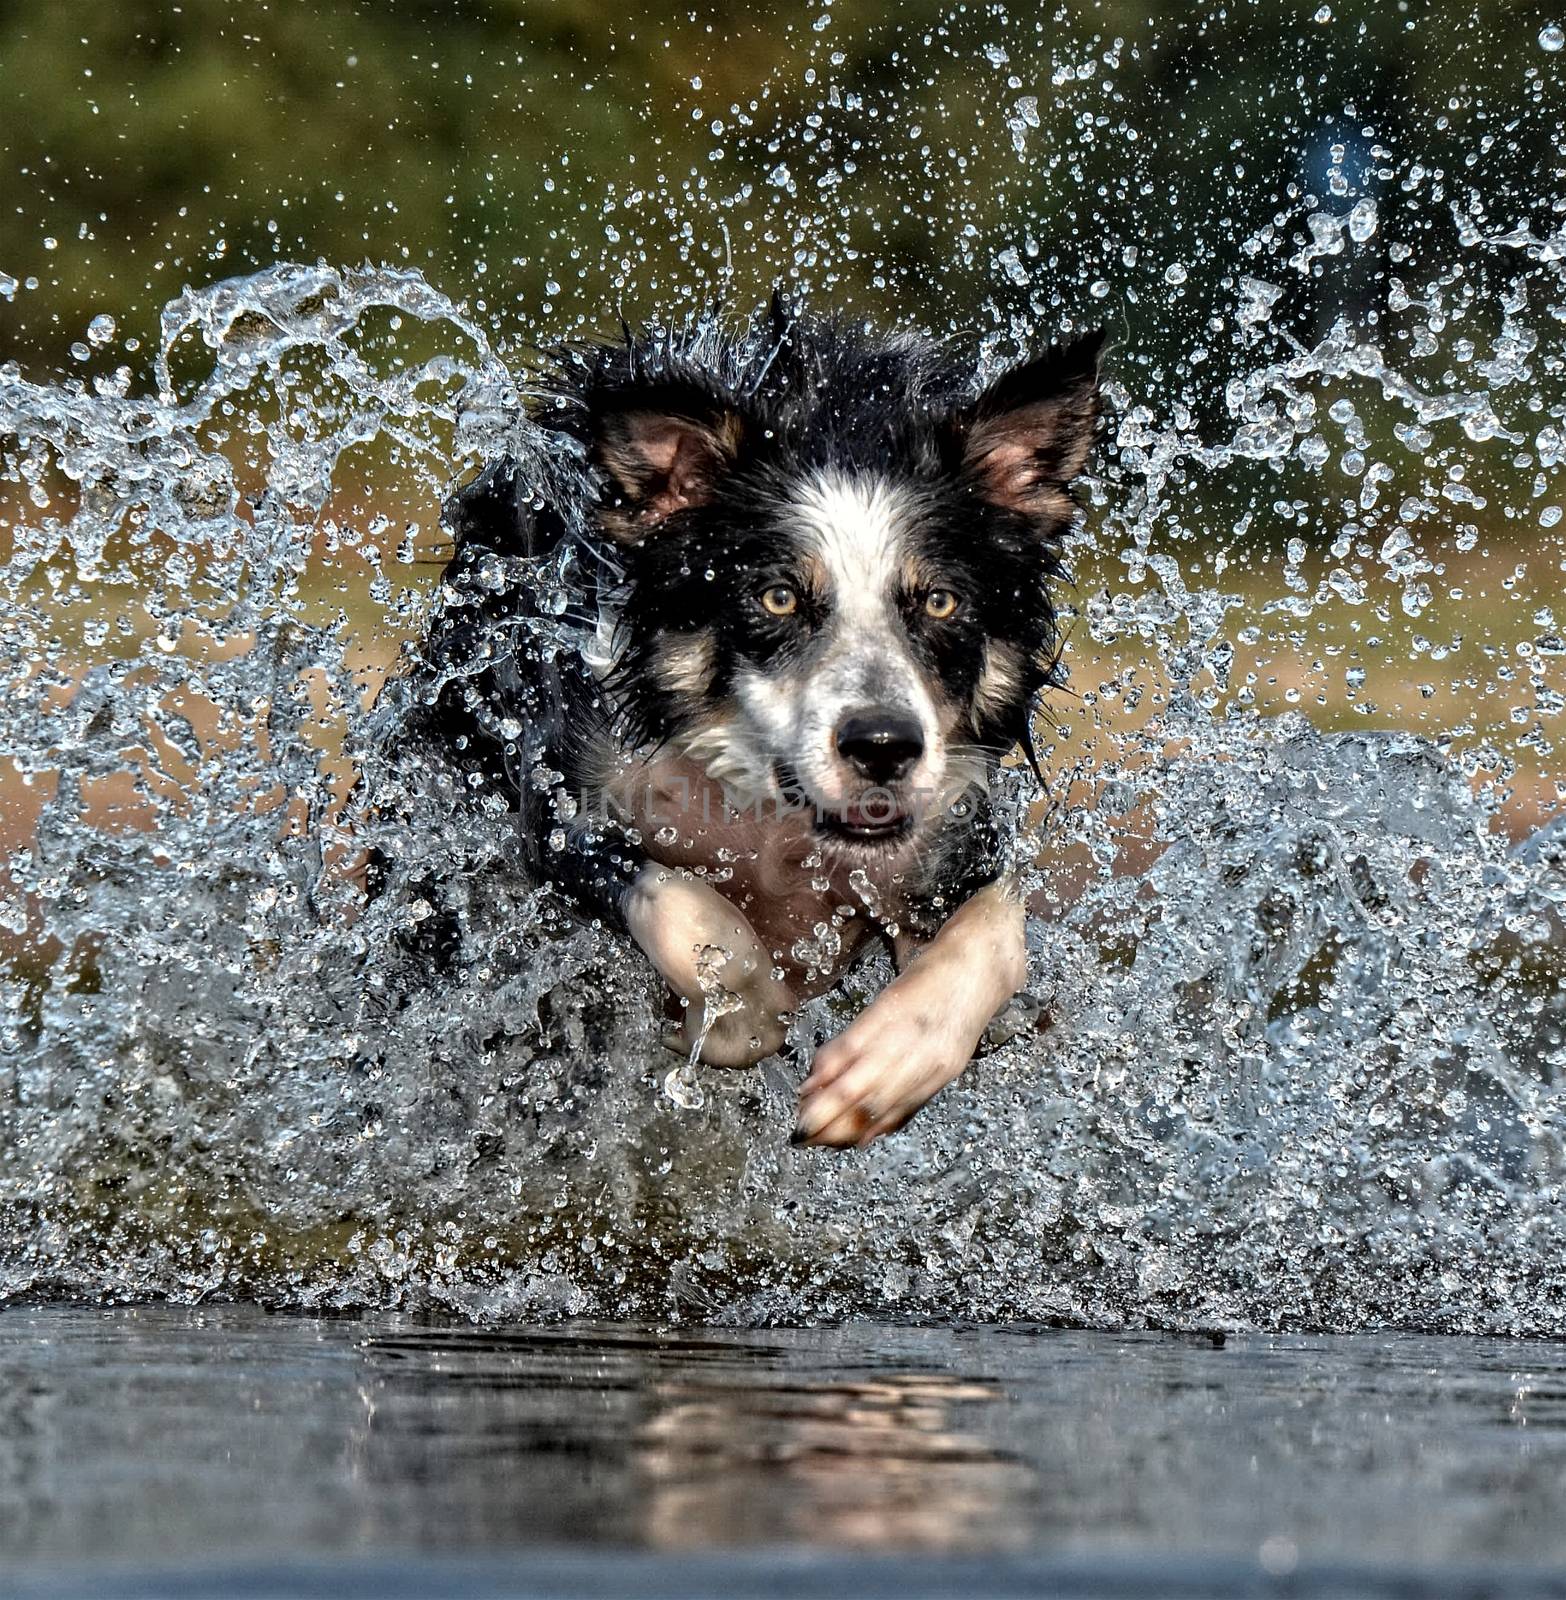 Dog running through water splash by JRTBurr